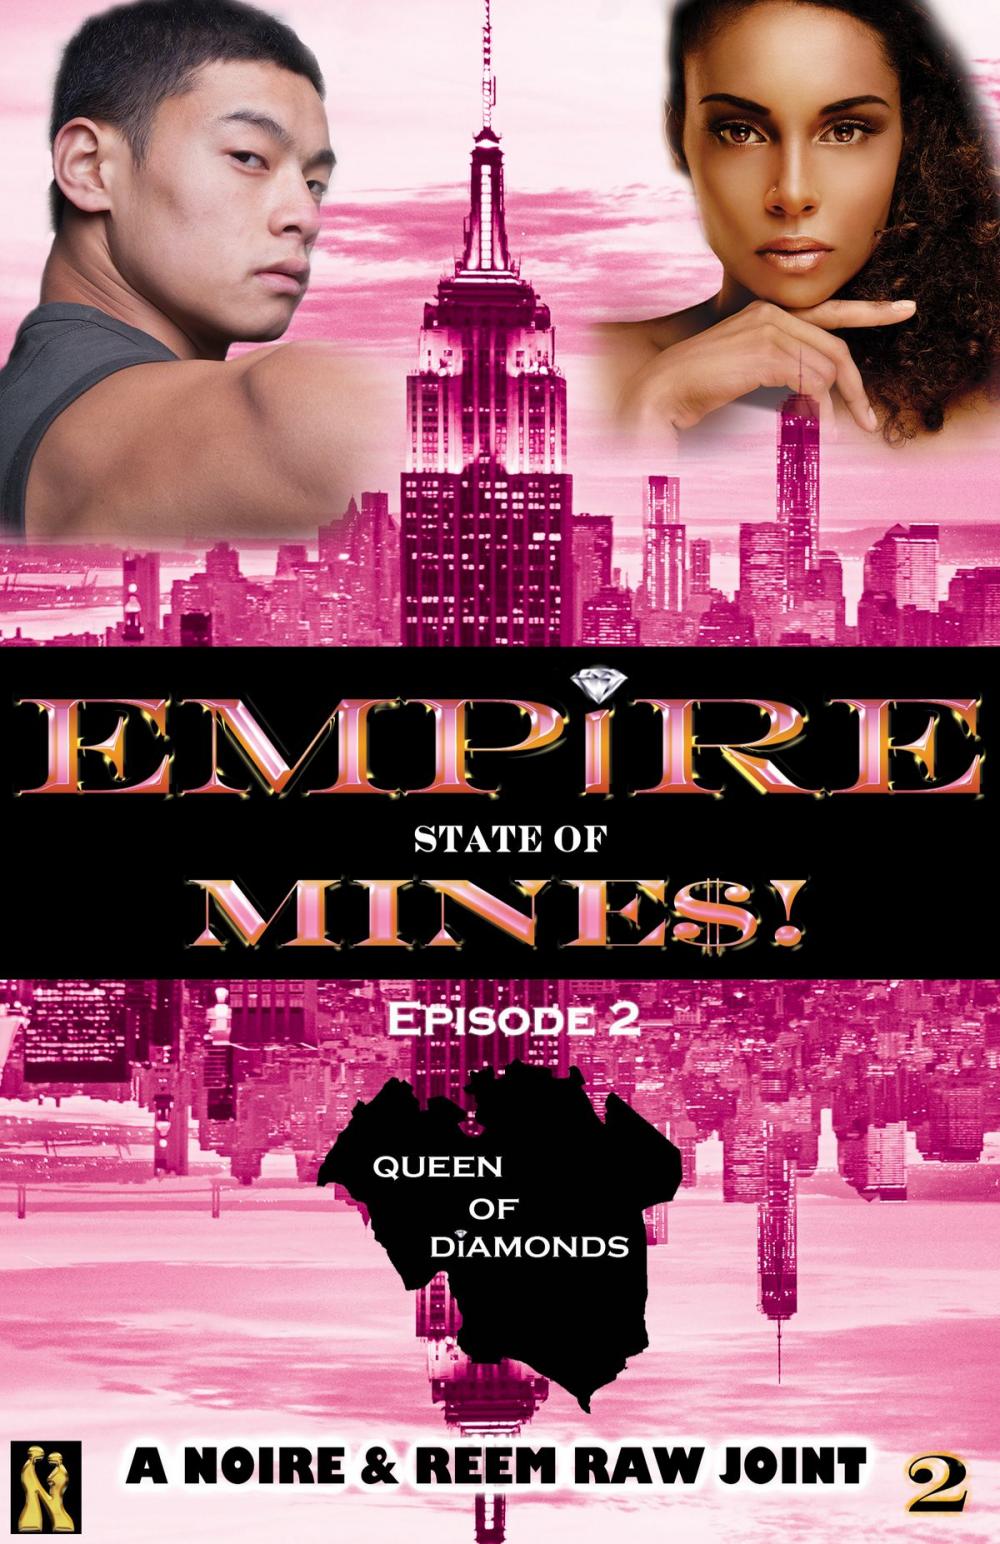 Big bigCover of Queen Diamonds: Episode 2 (Empire State of Mine$!)